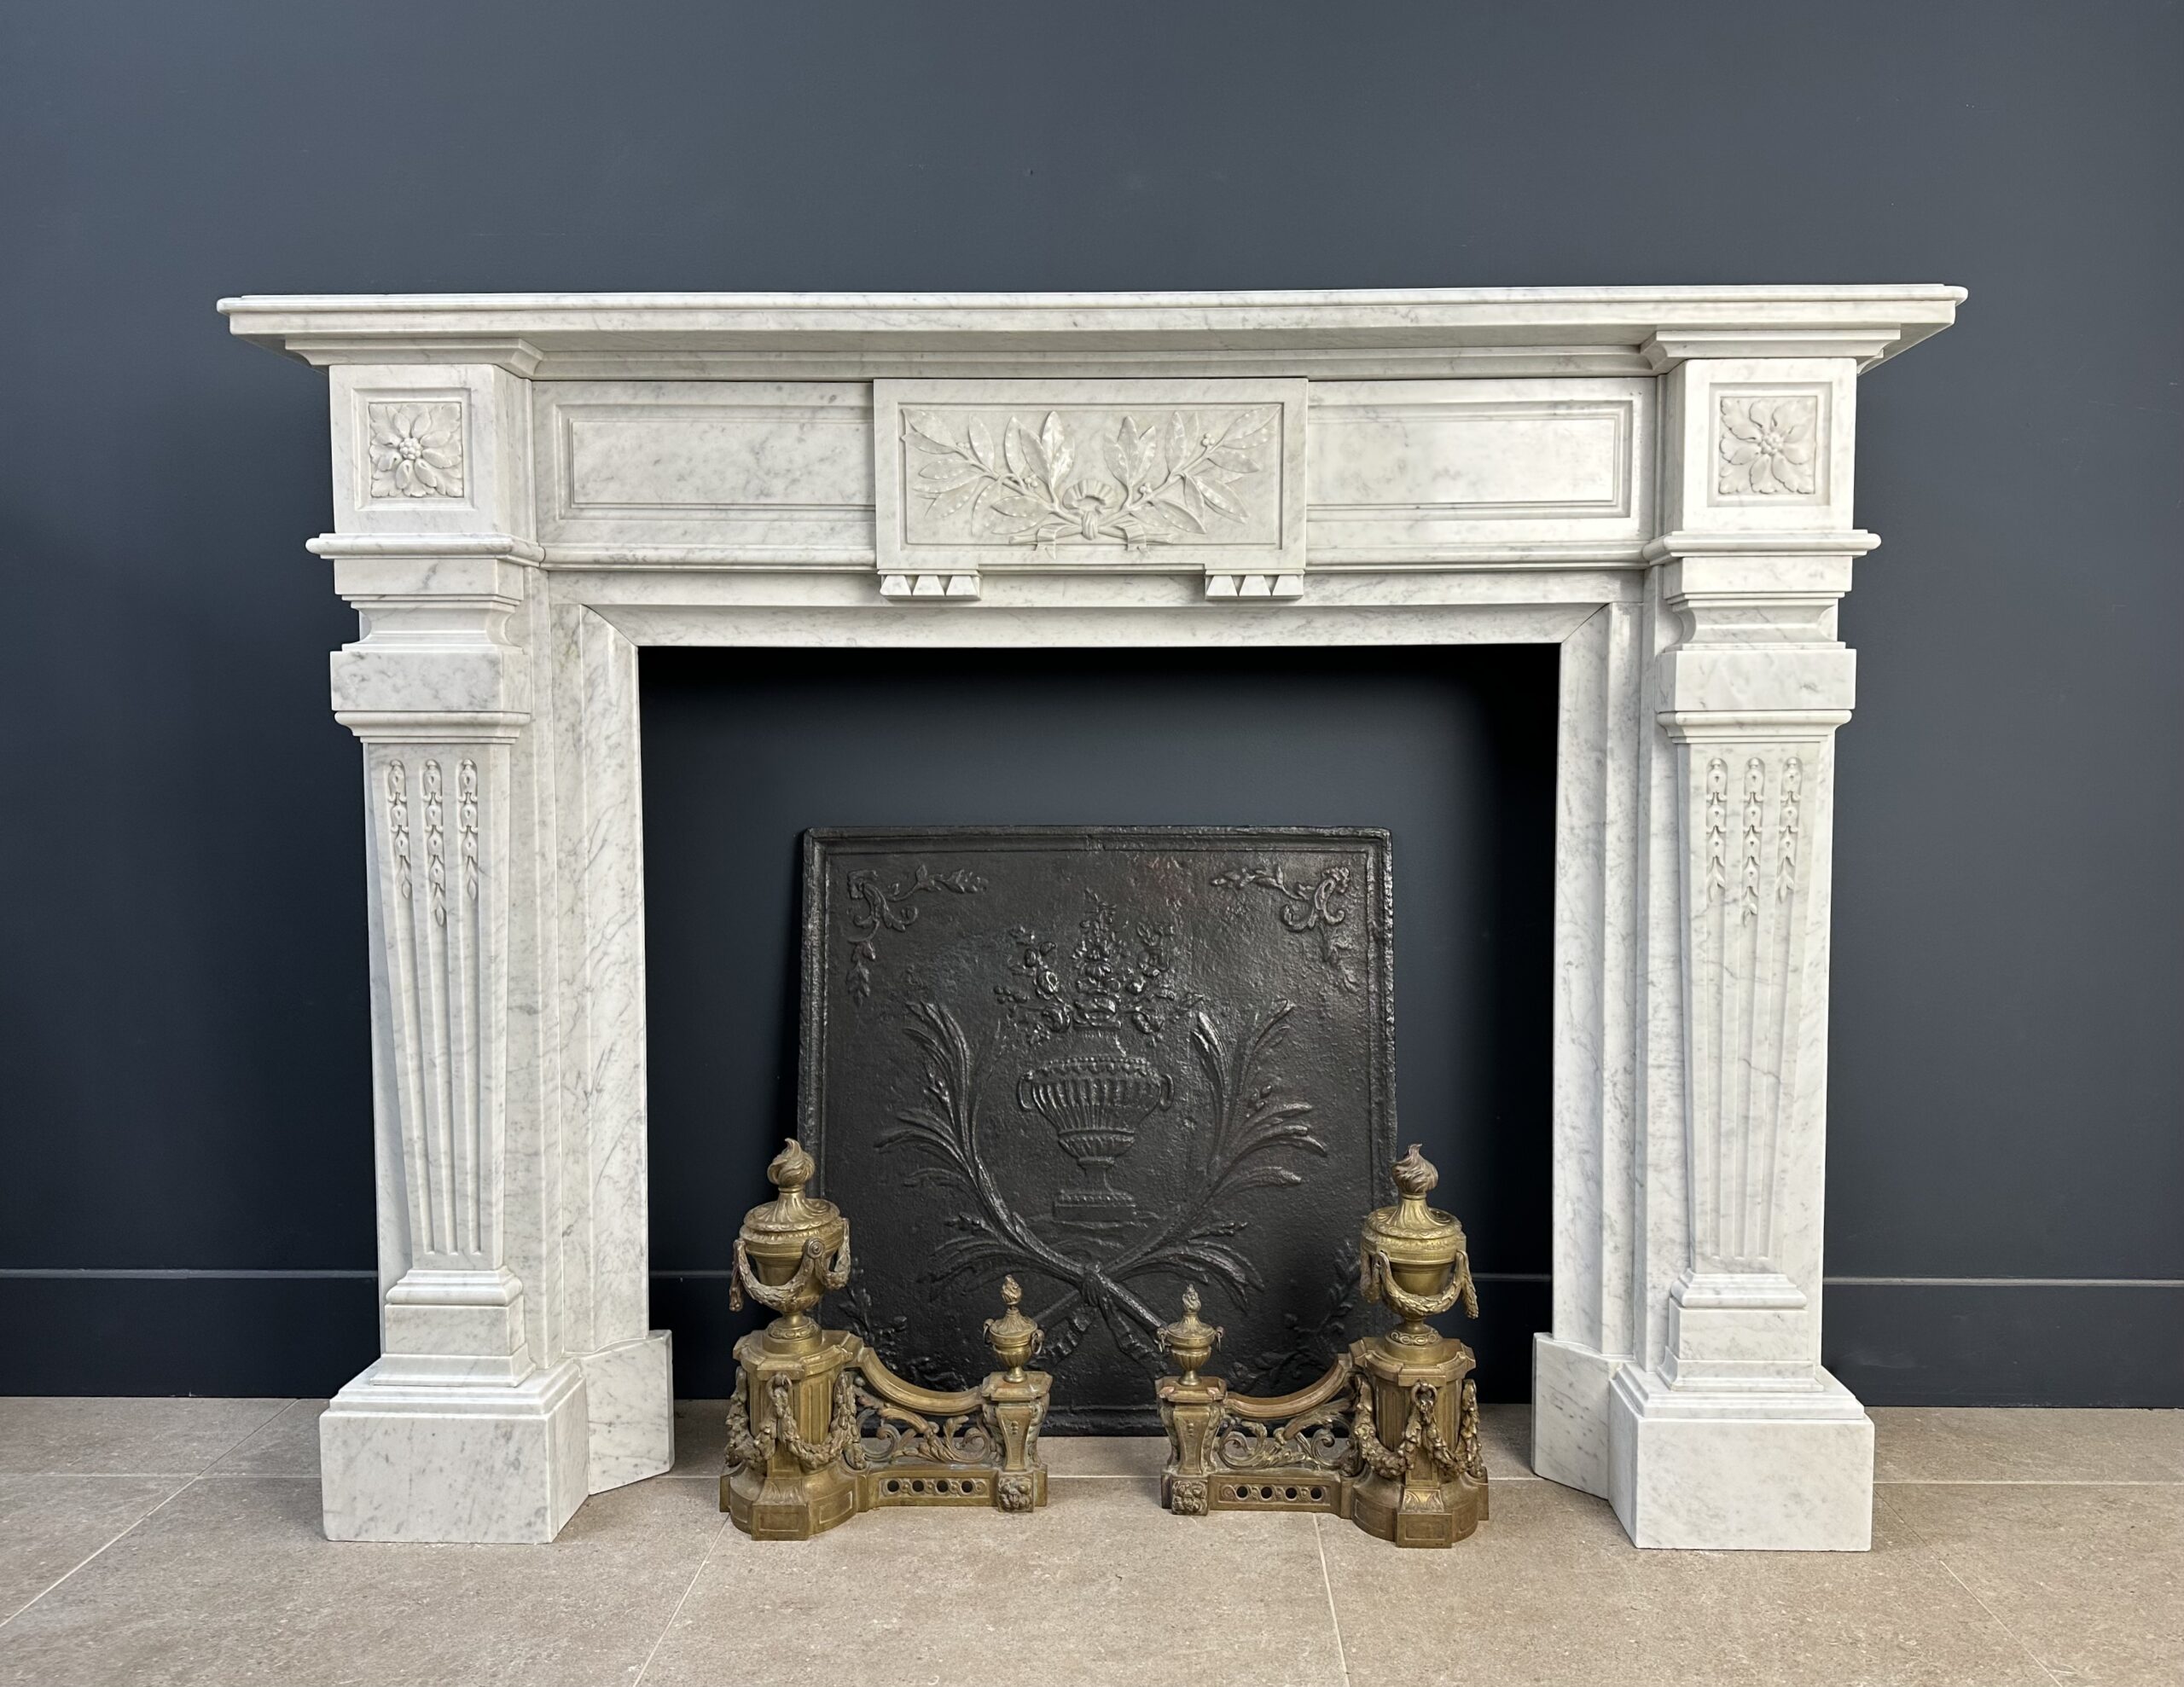 Antique Empire fireplace